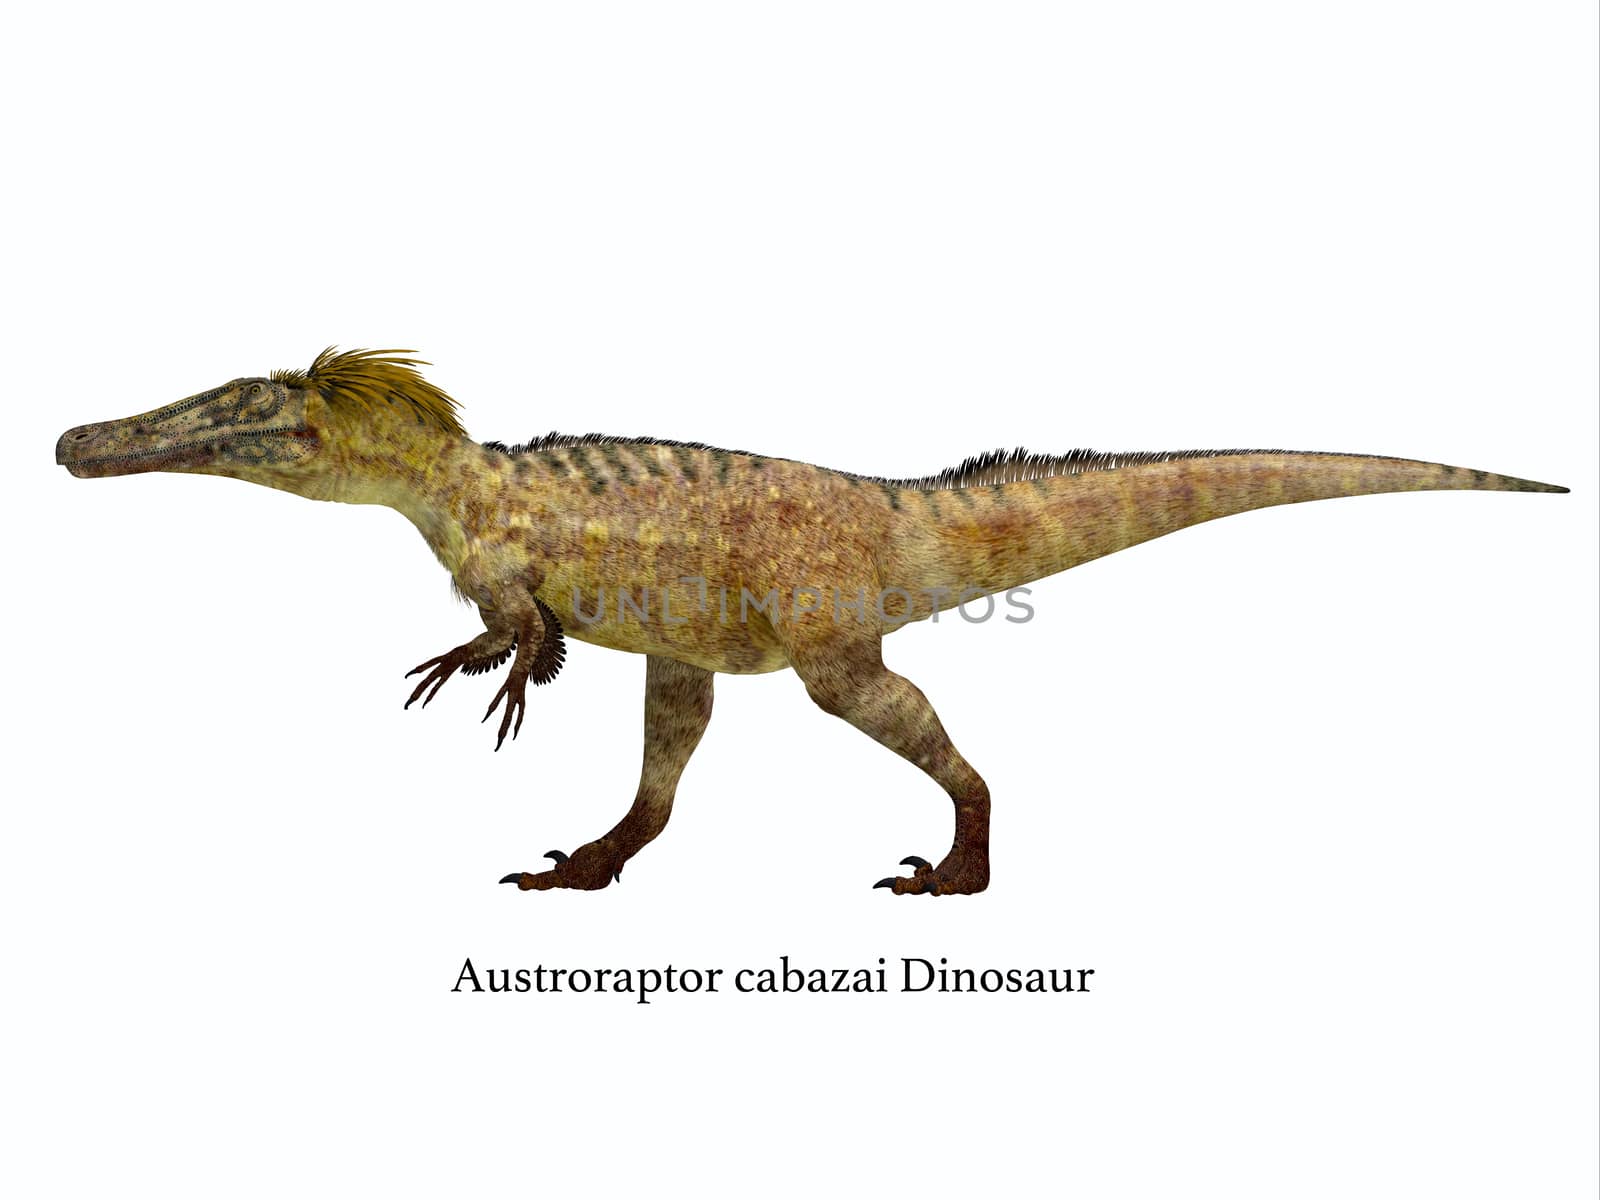 Austroraptor Dinosaur Side Profile by Catmando